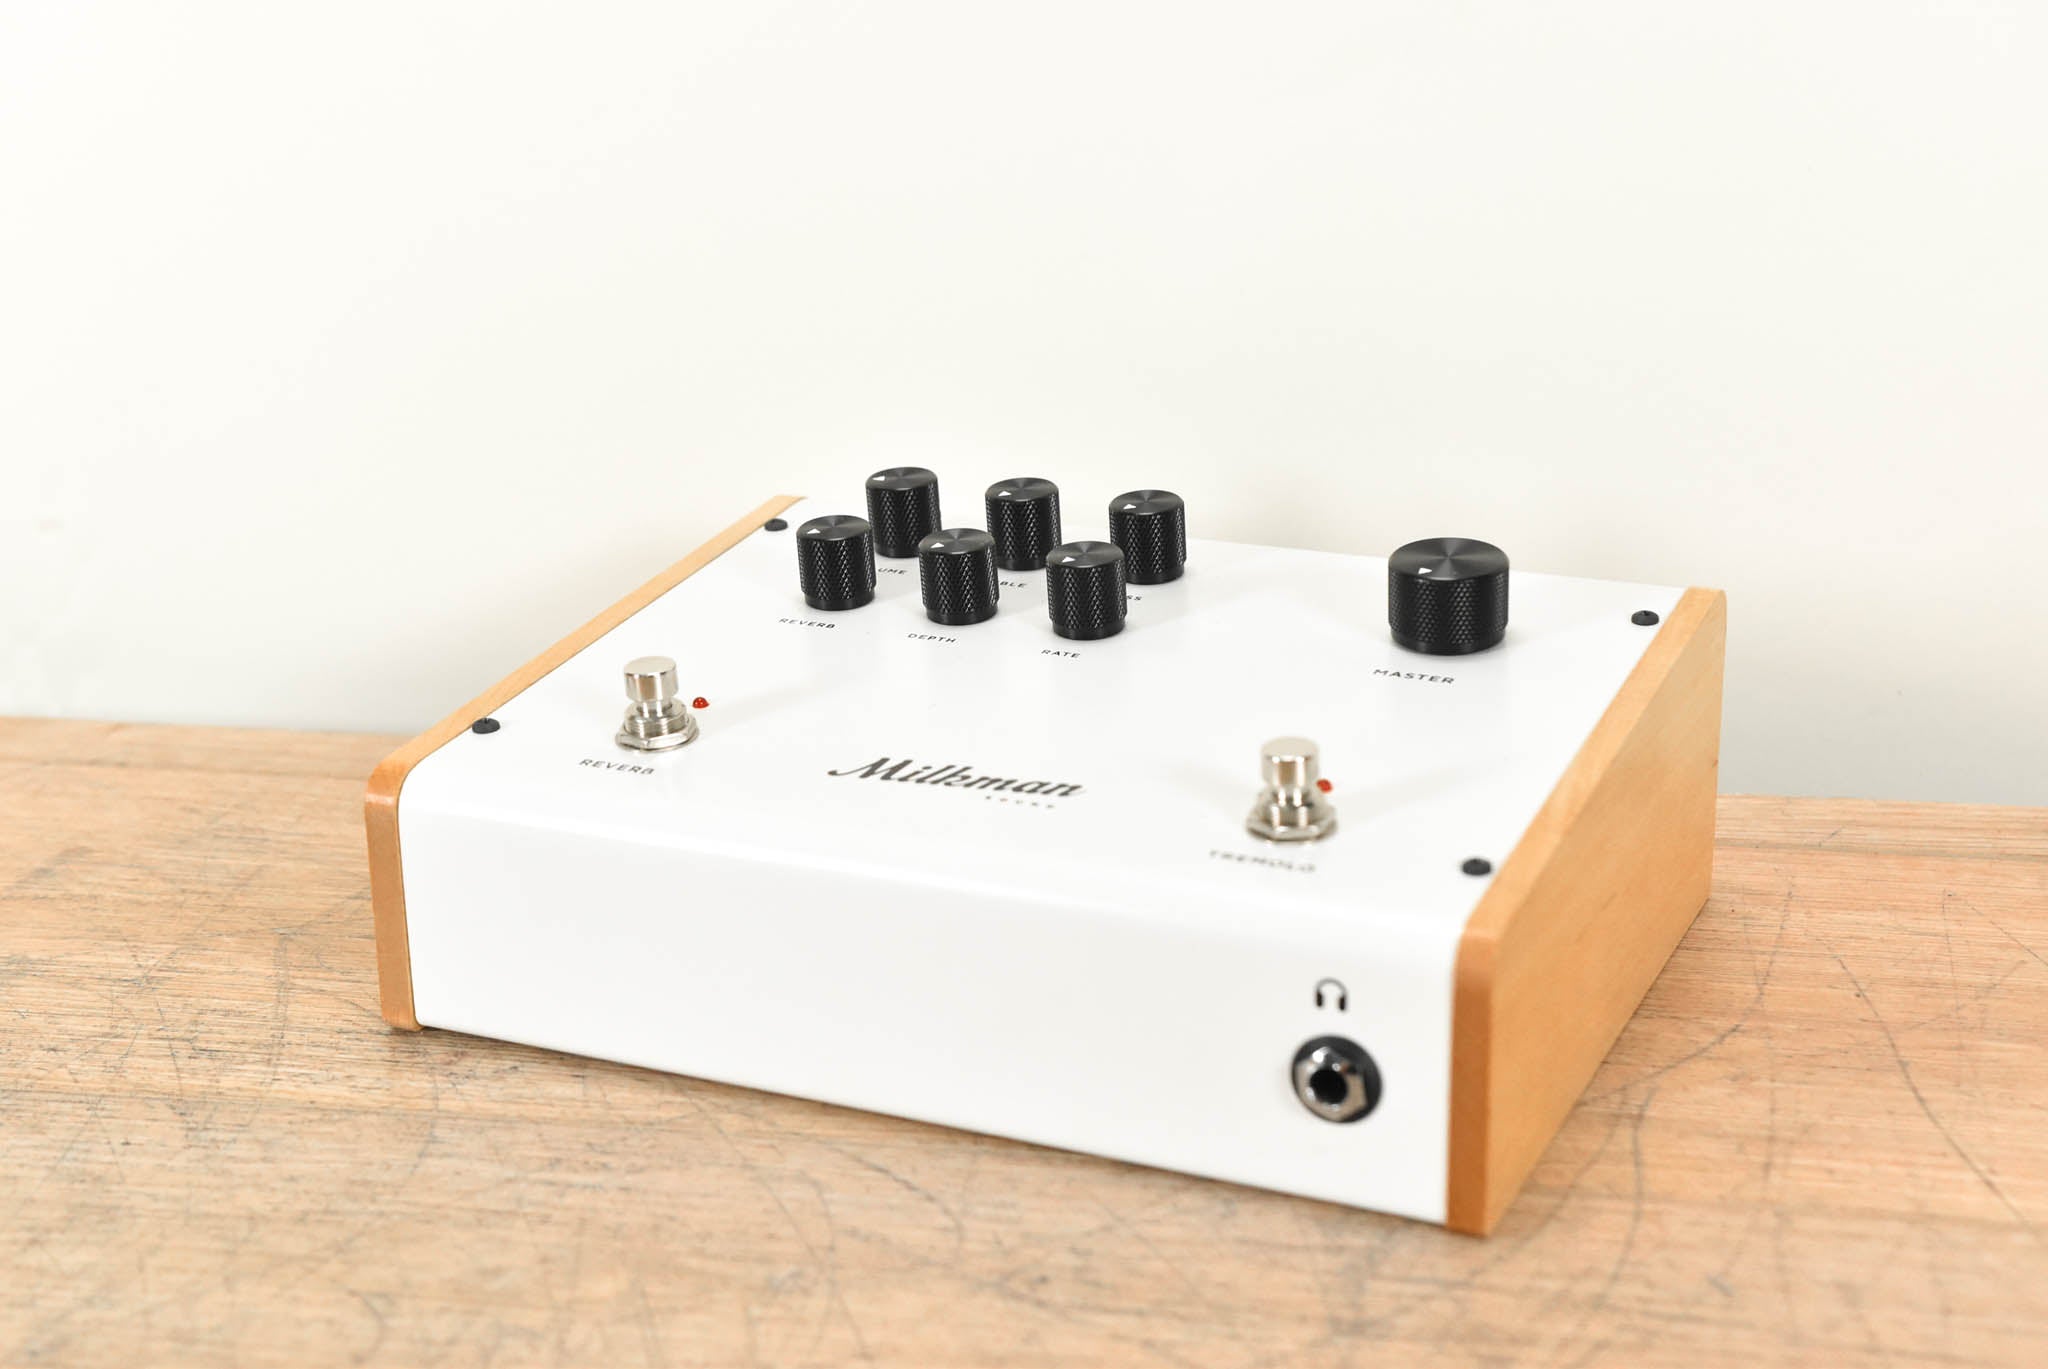 Milkman Sound The Amp 50W Guitar Amplifier Pedal